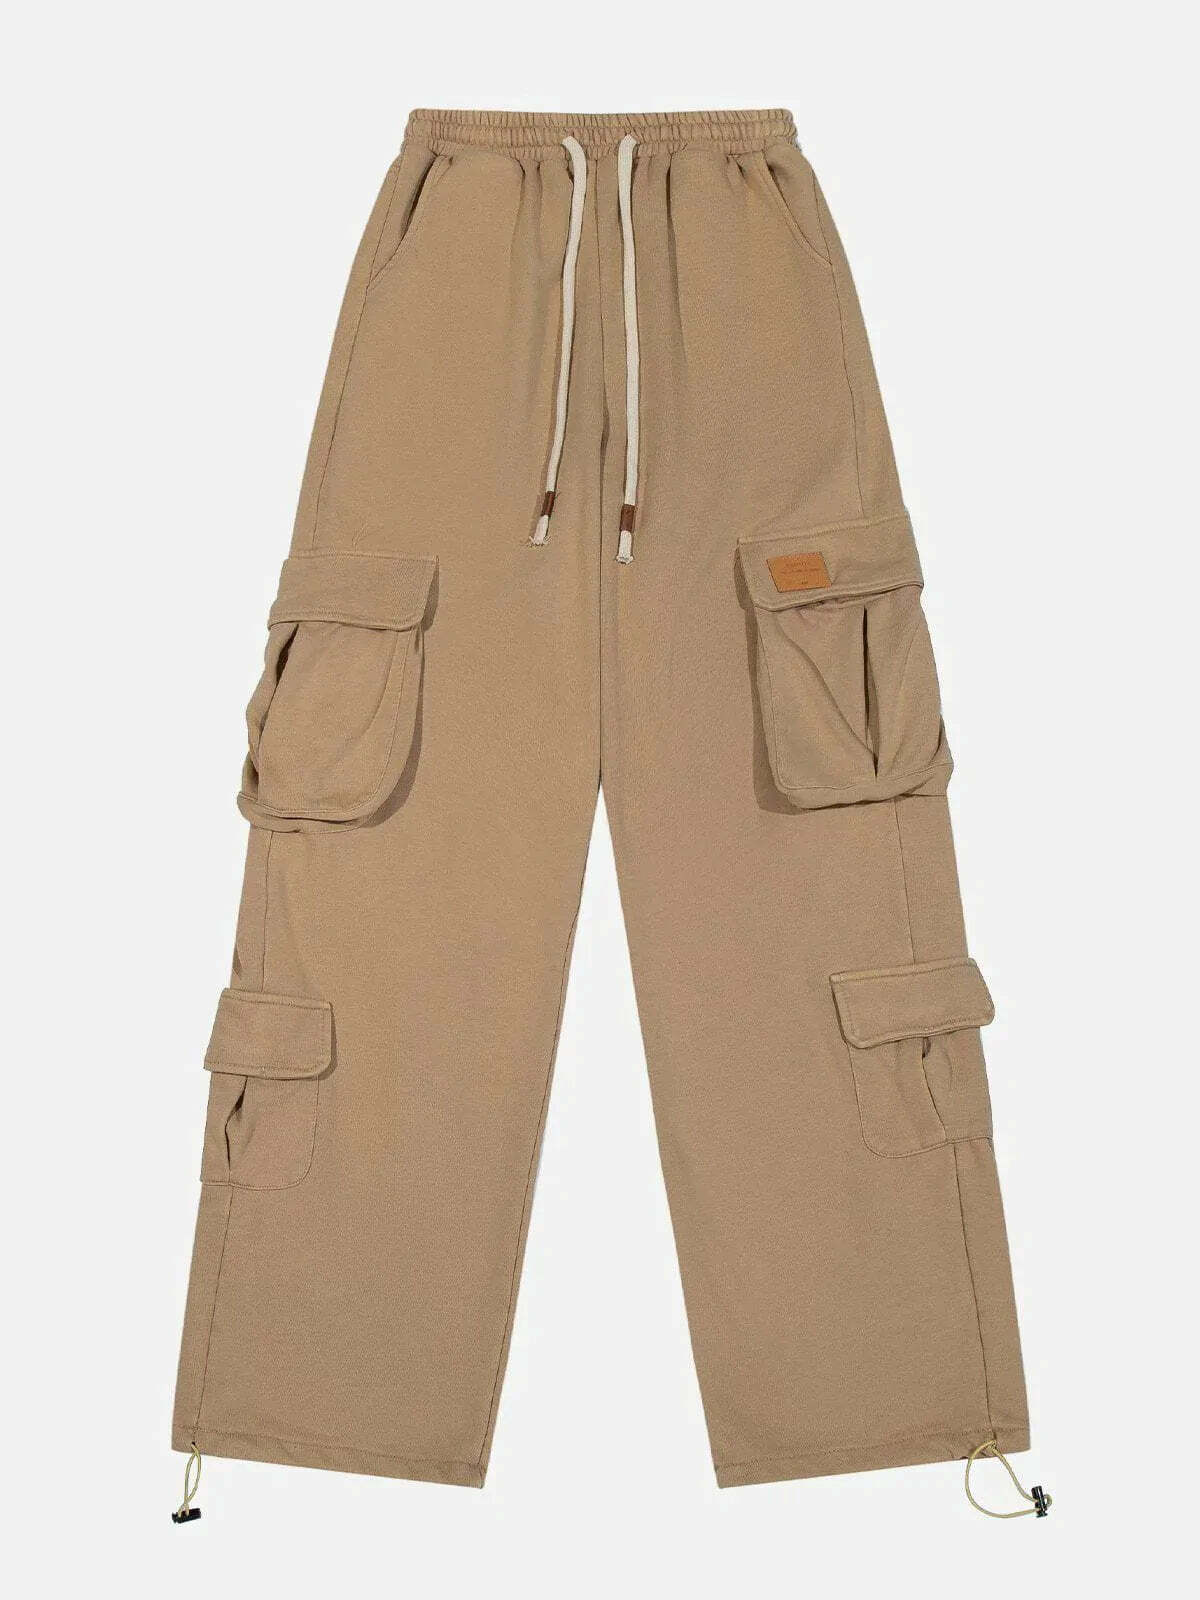 multipocket drawstring pants functional & edgy streetwear 8095